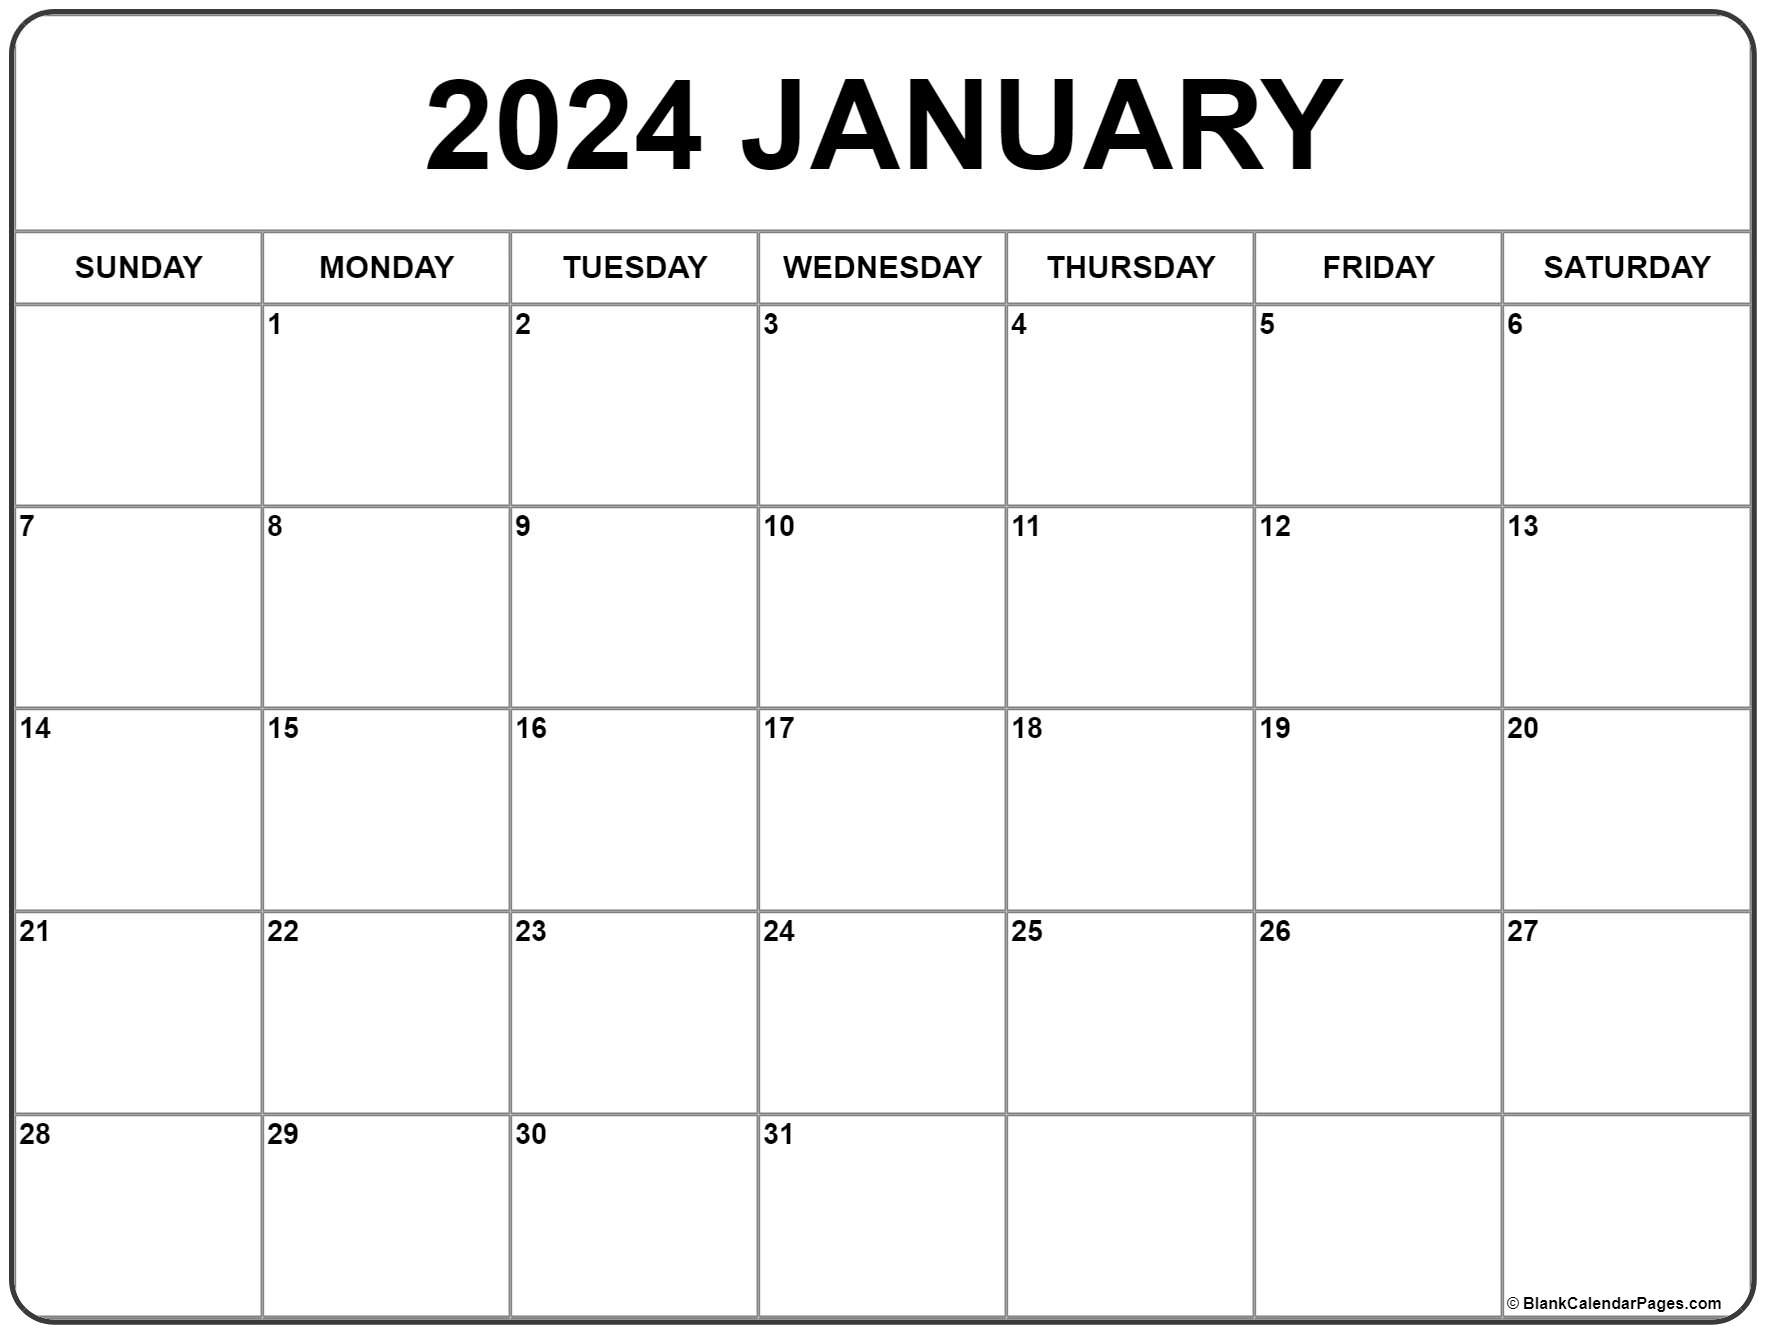 January 2024 Calendar | Free Printable Calendar for 2024 Calendar Blank Printable